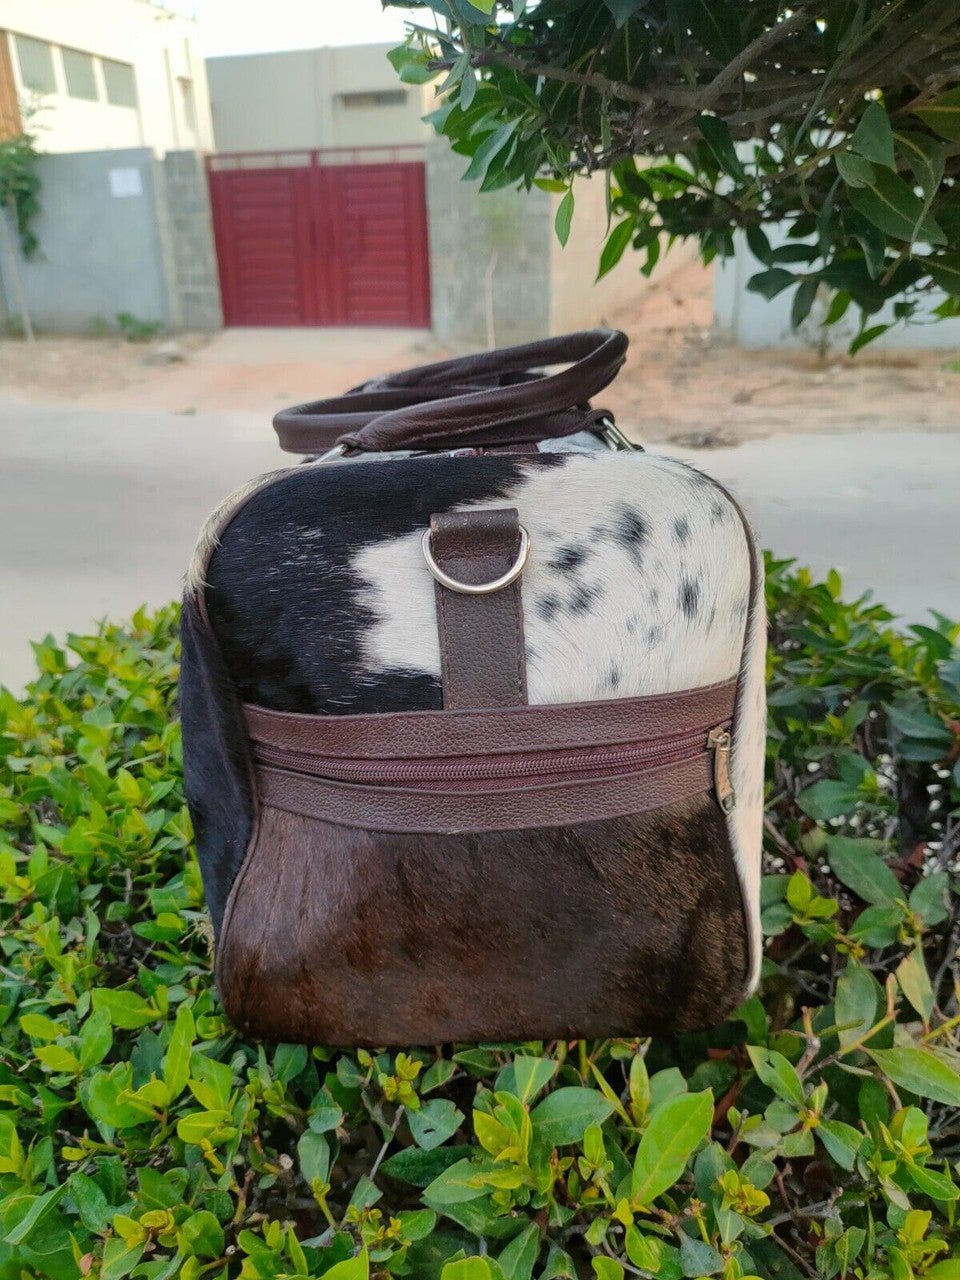 Tricolor Cowhide Duffle Bag